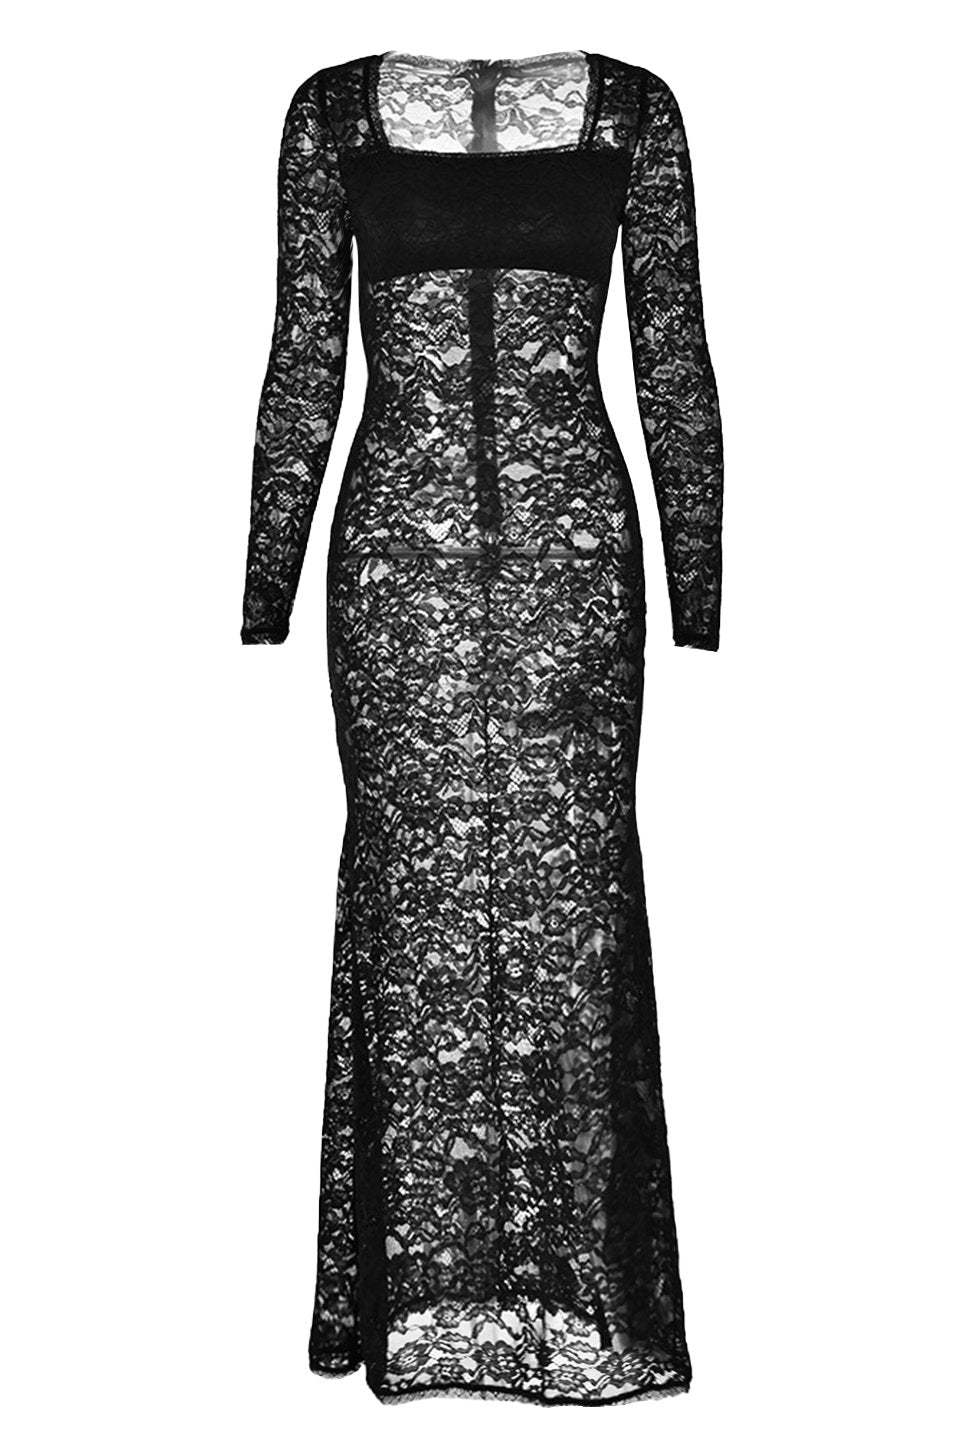 dresses-Bertha Square Neck Lace Maxi Dress-SD00211061825-Black-S - Sunfere